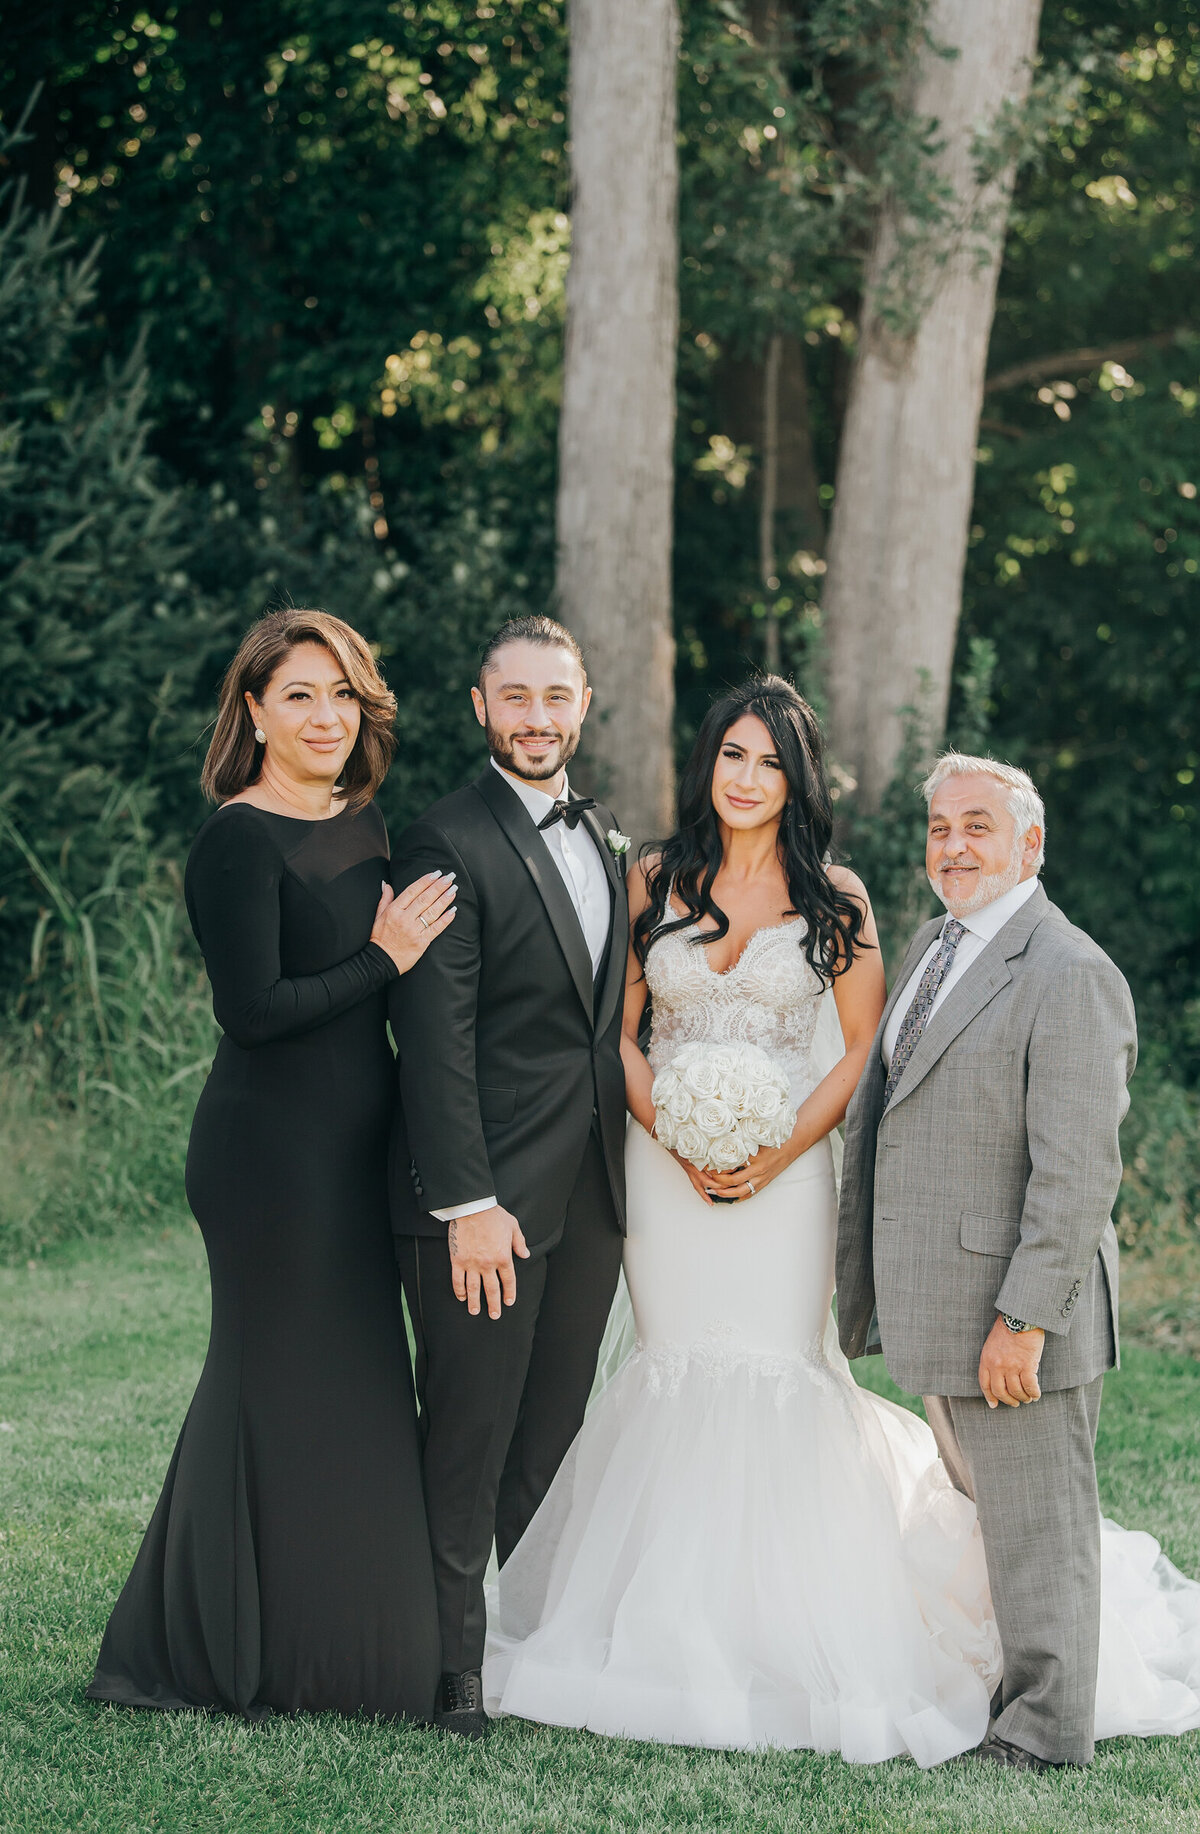 Elegant formal family photos on a wedding day